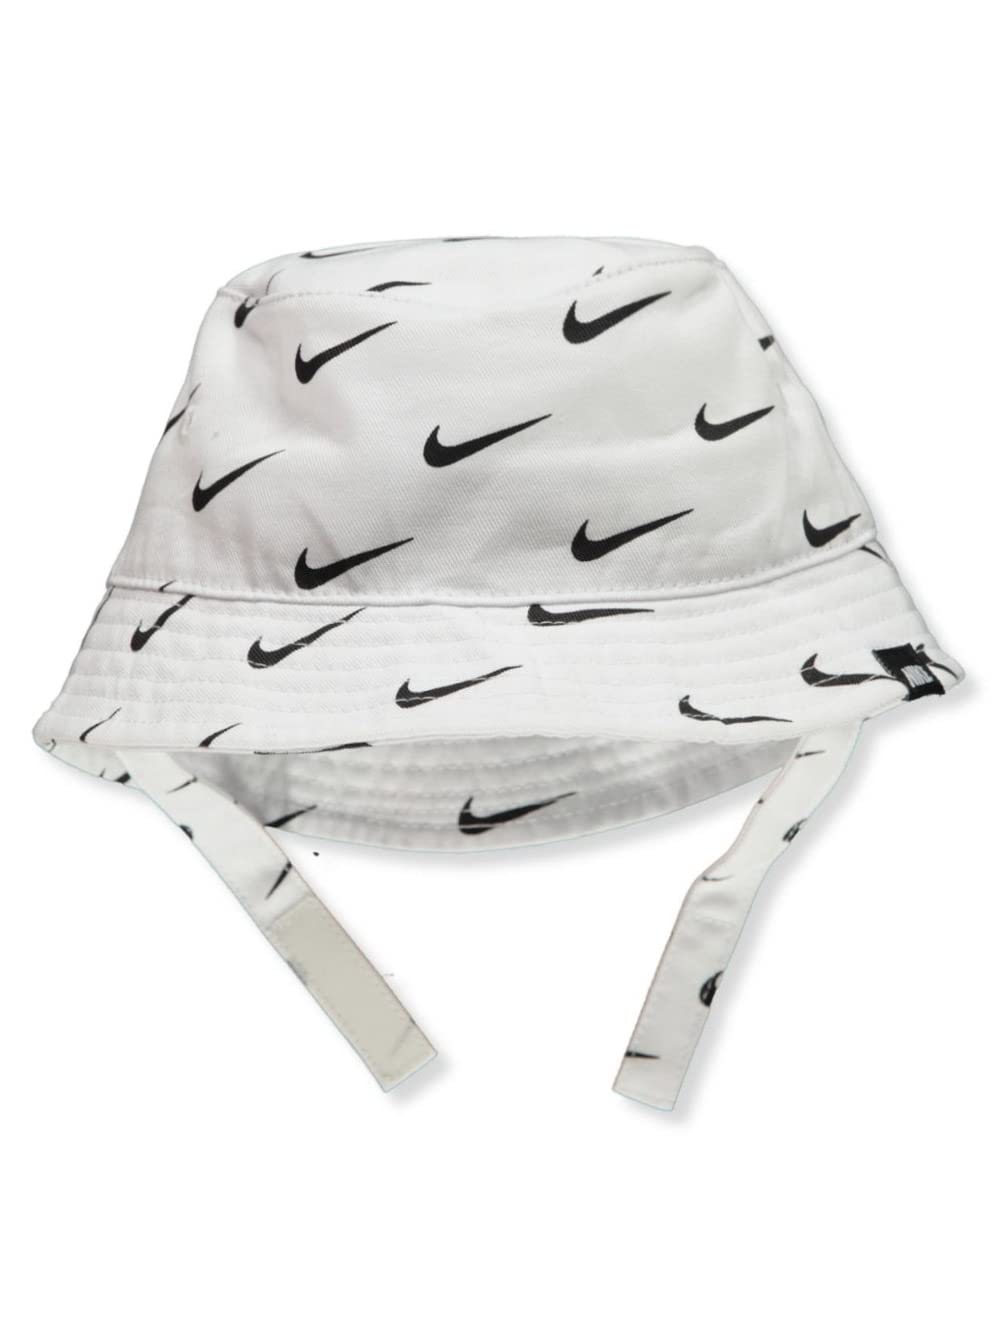 Nike Baby Boys' Bucket Hat - White, 12-24 Months